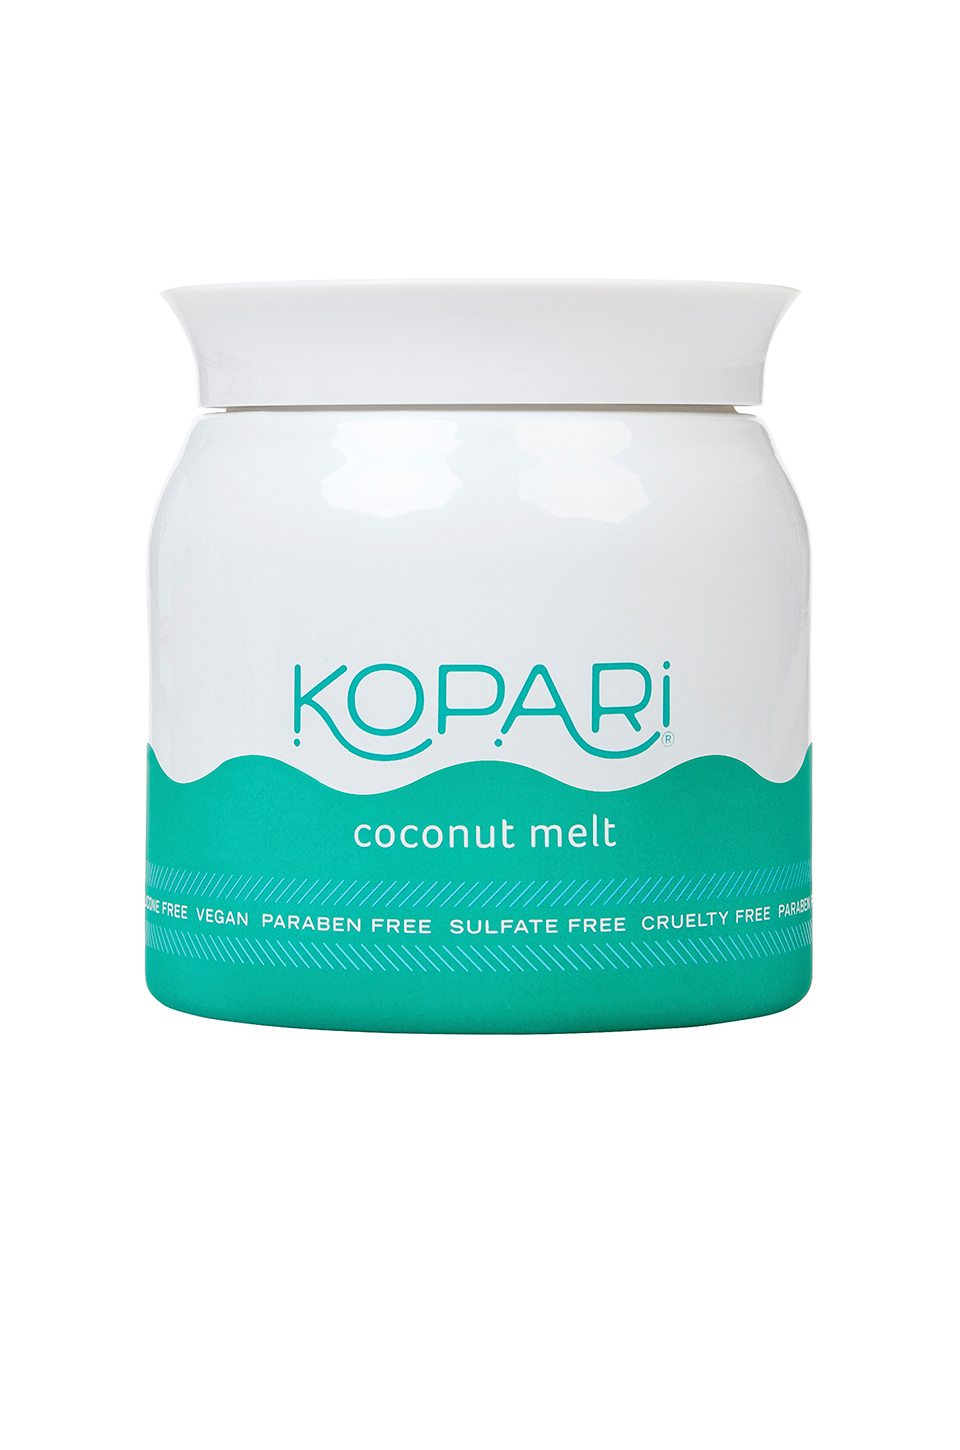 Teal and white jar of Kopari coconut melt